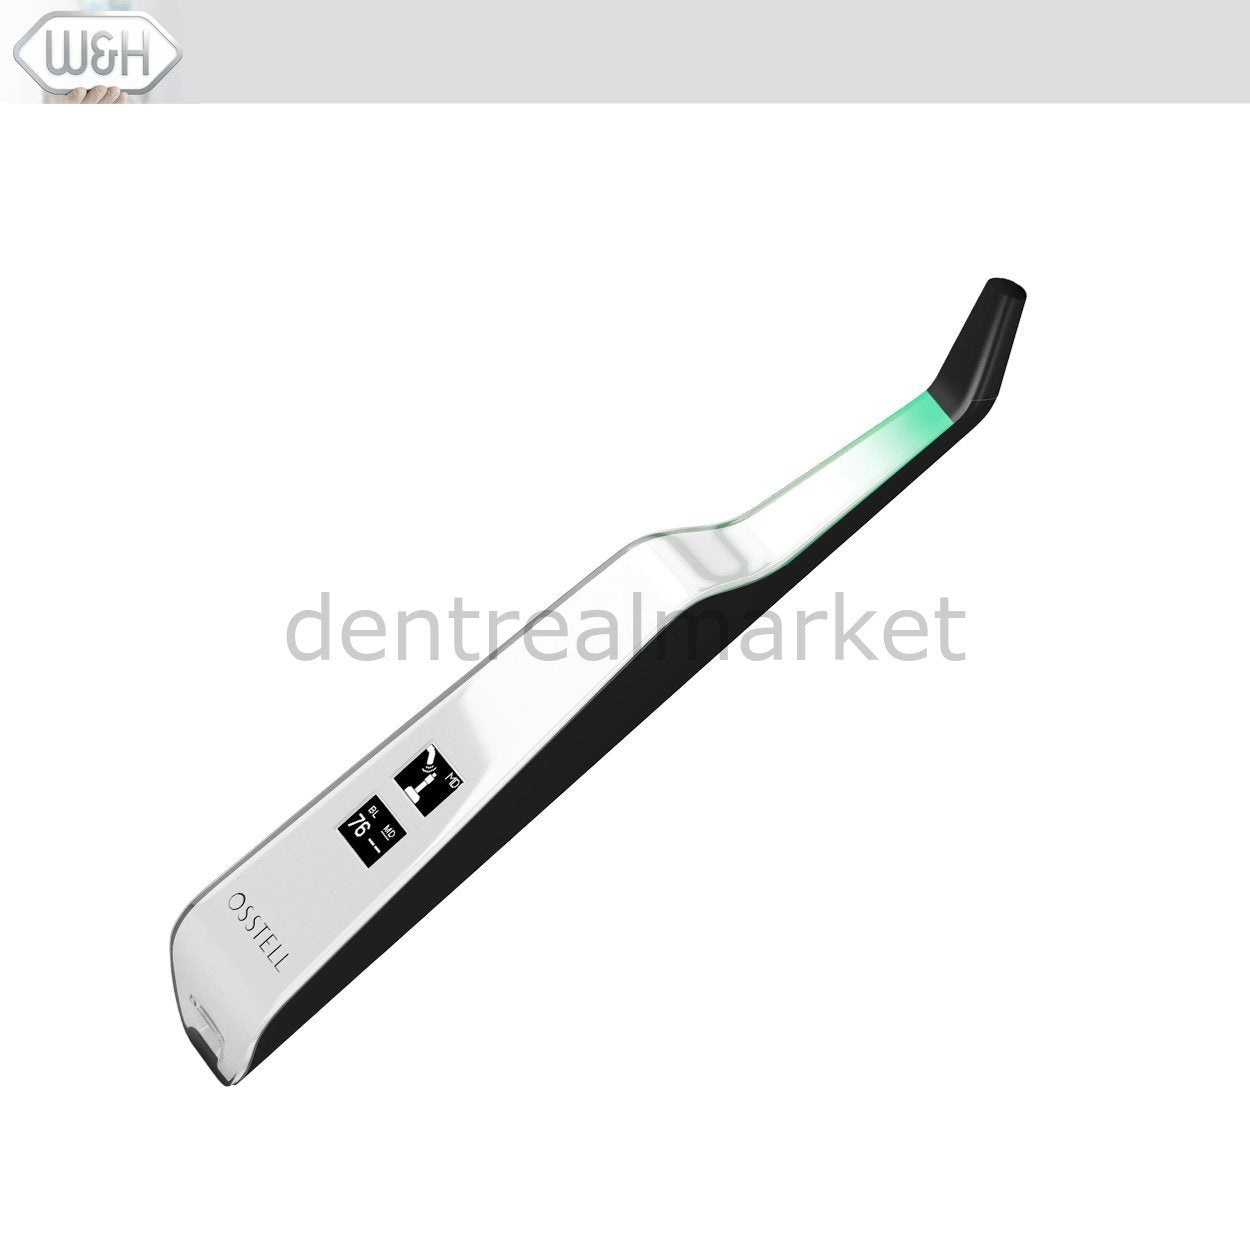 DentrealStore - W&H Dental Rfa Osstell Beacon Device